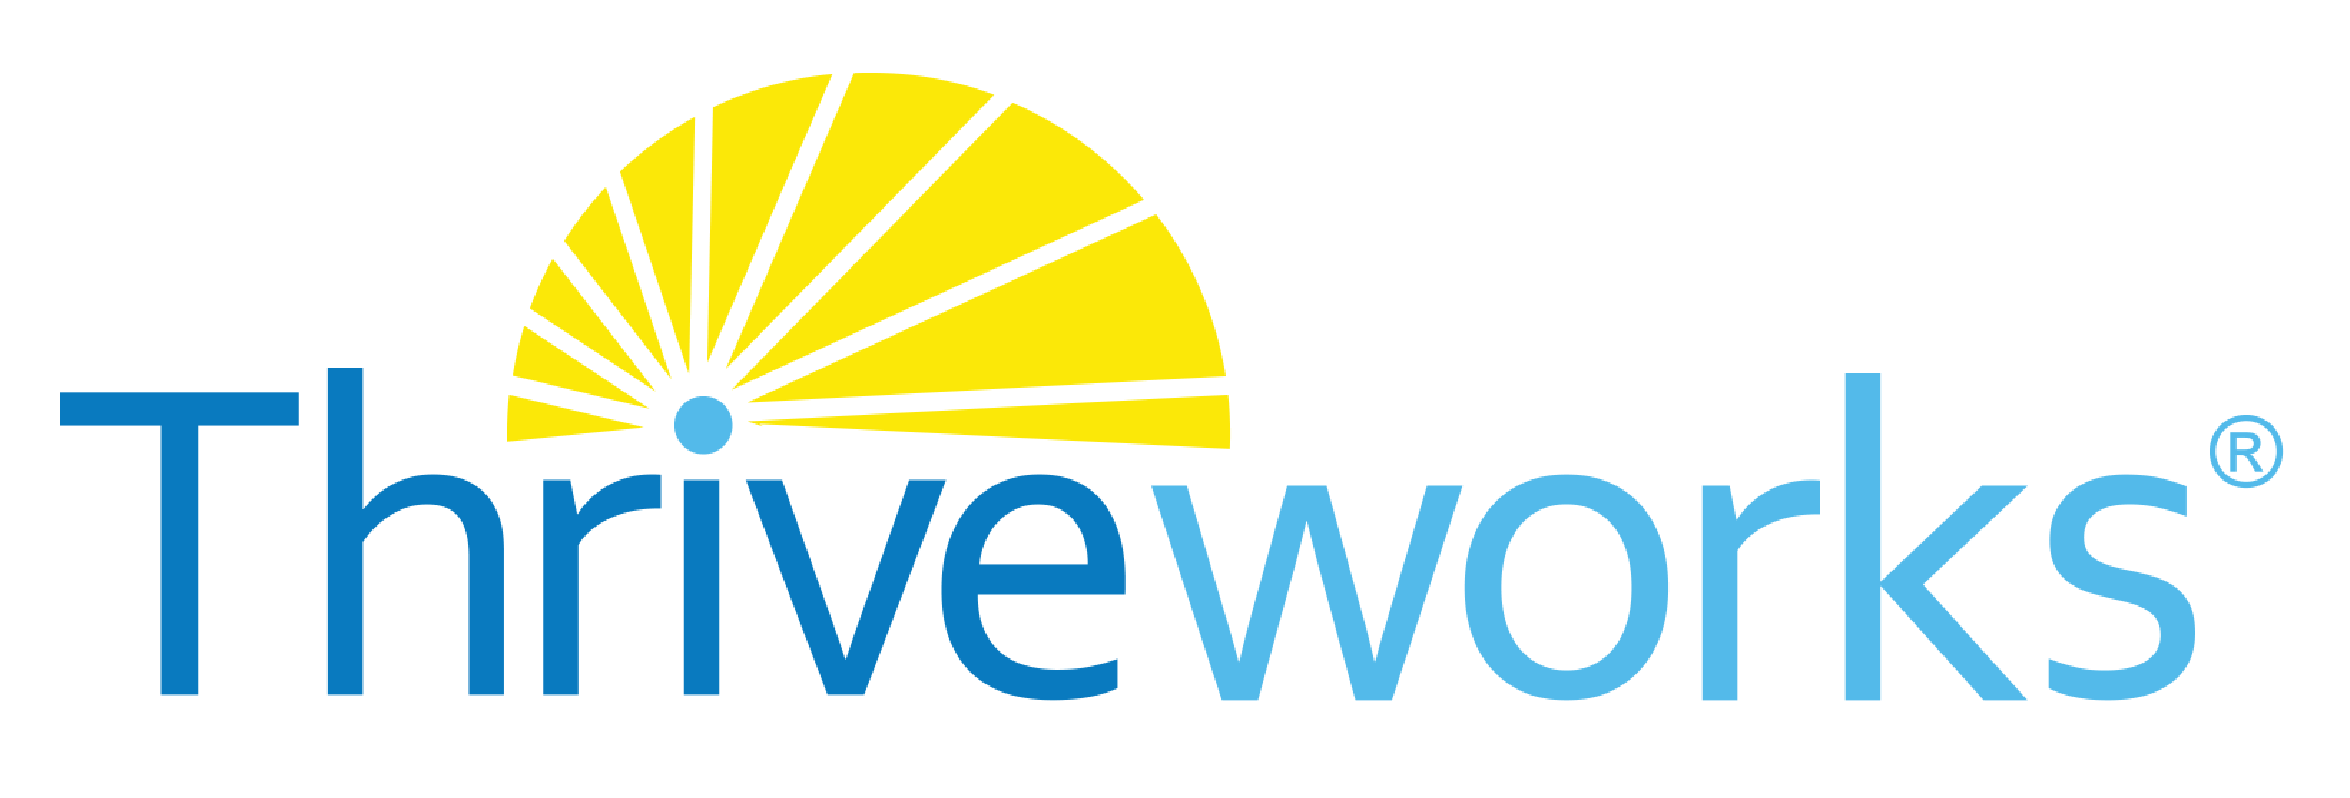 thriveworks-logo-1 (1).png